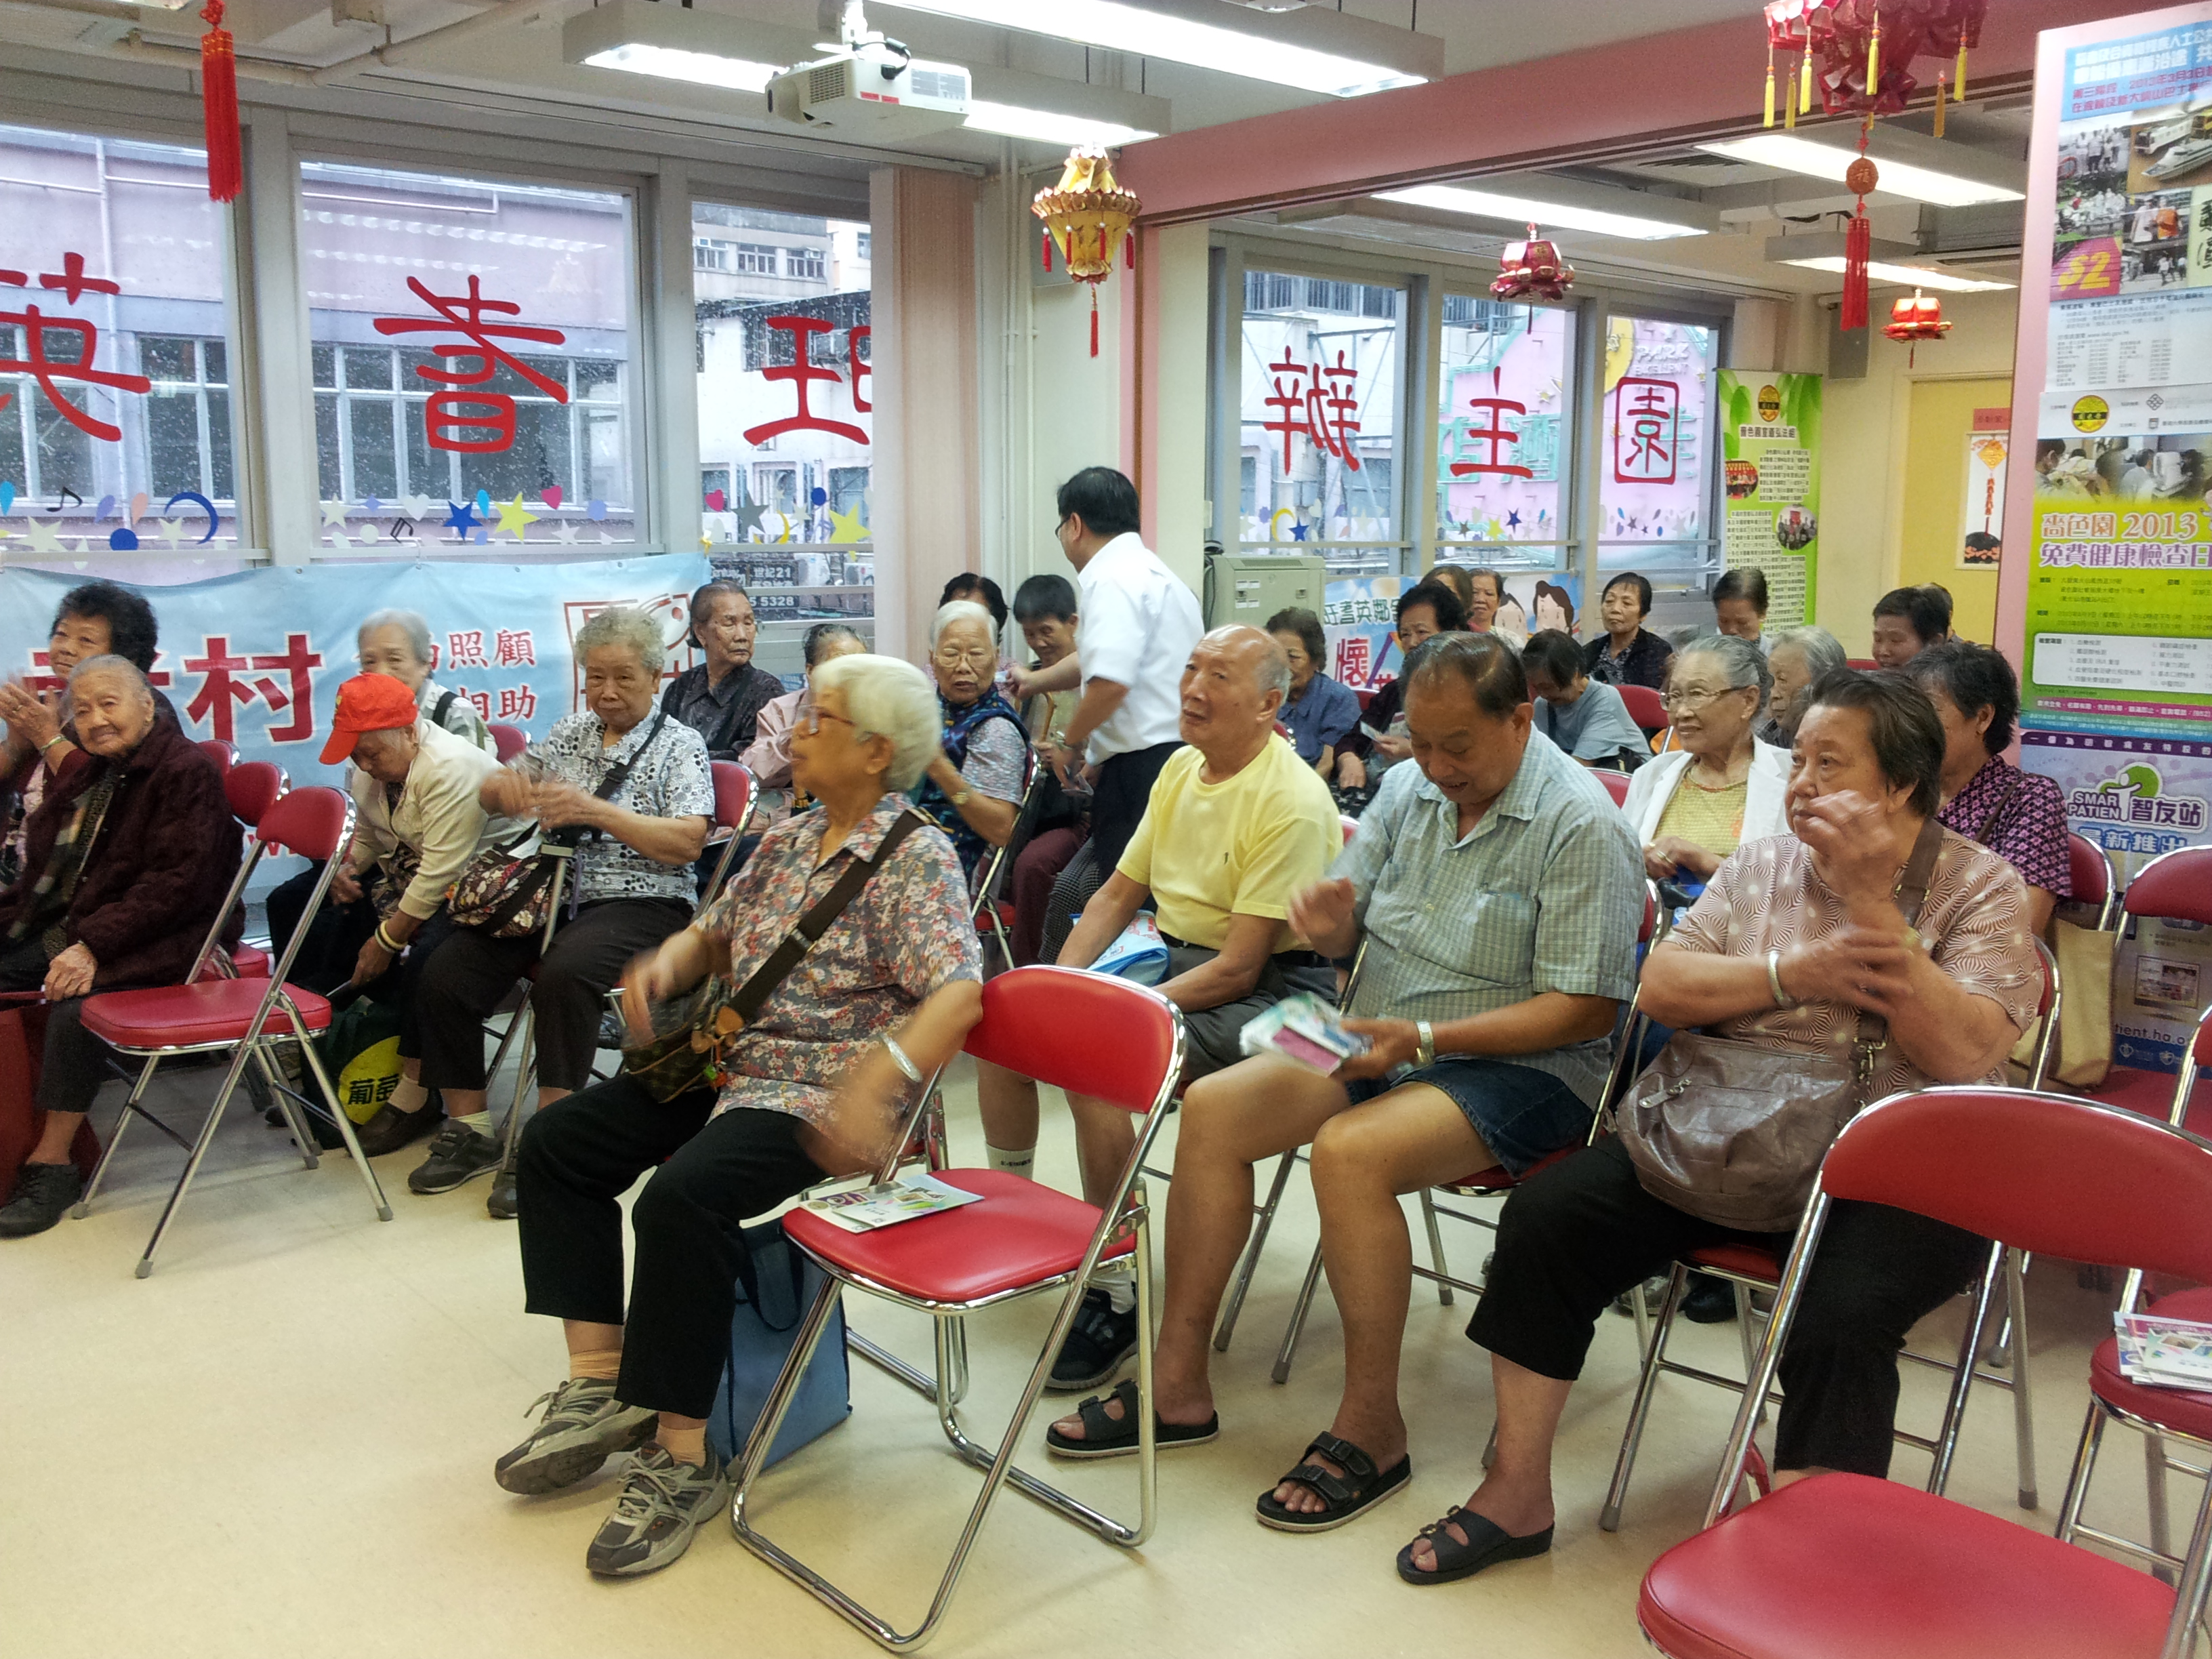 Ho Wong Neighbourhood Centre for Senior Citizens (Sponsored by Sik Sik Yuen